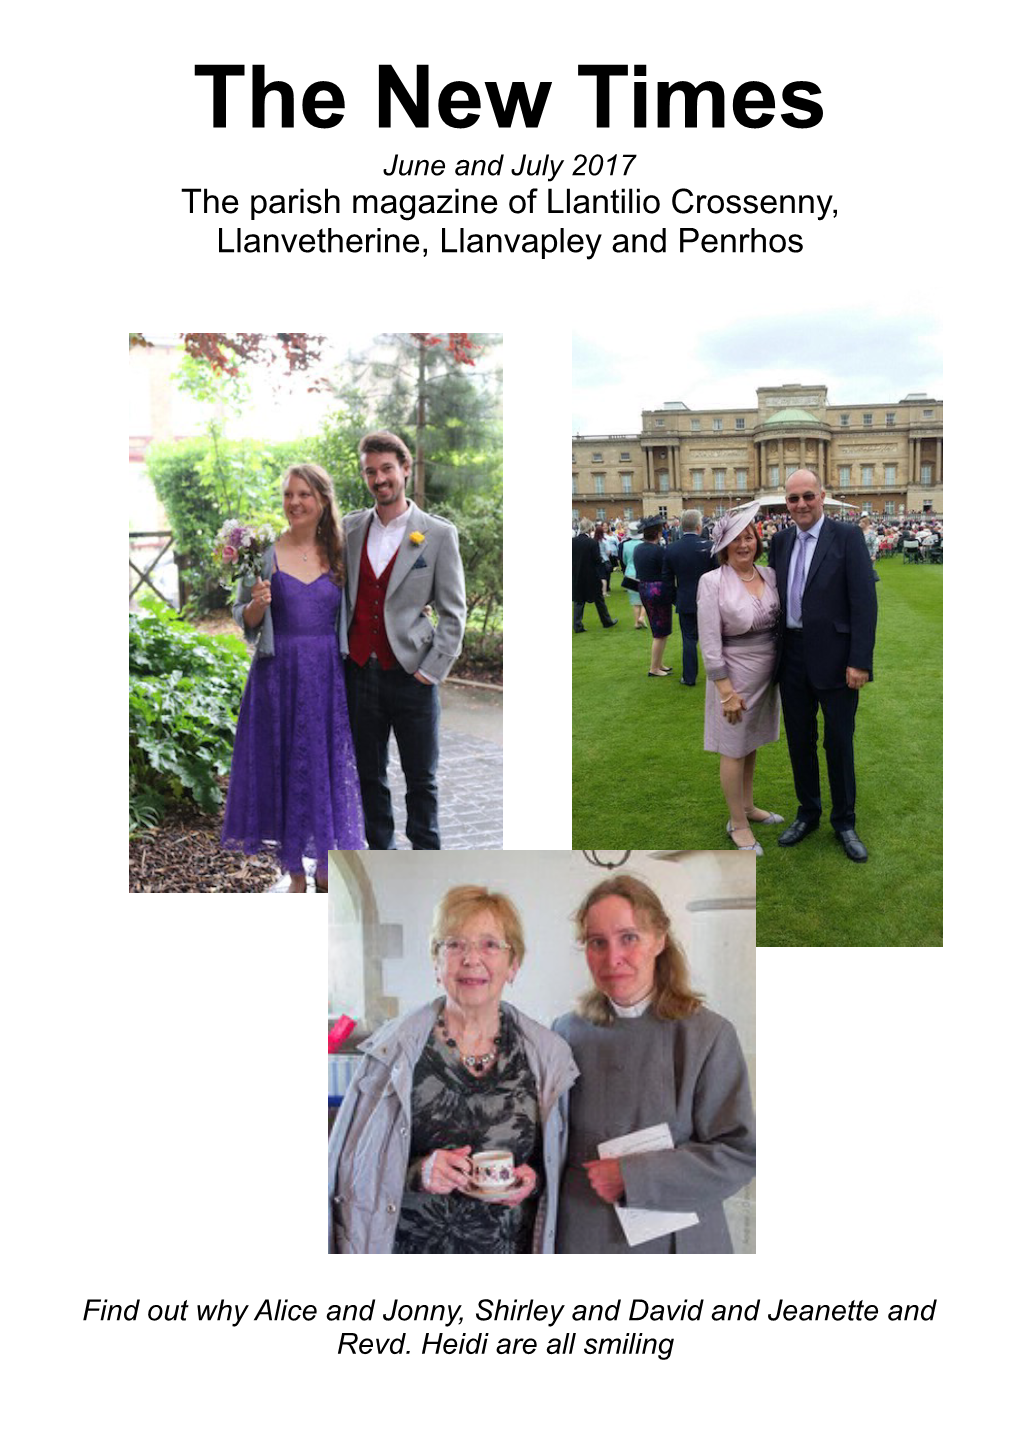 The New Times June and July 2017 the Parish Magazine of Llantilio Crossenny, Llanvetherine, Llanvapley and Penrhos